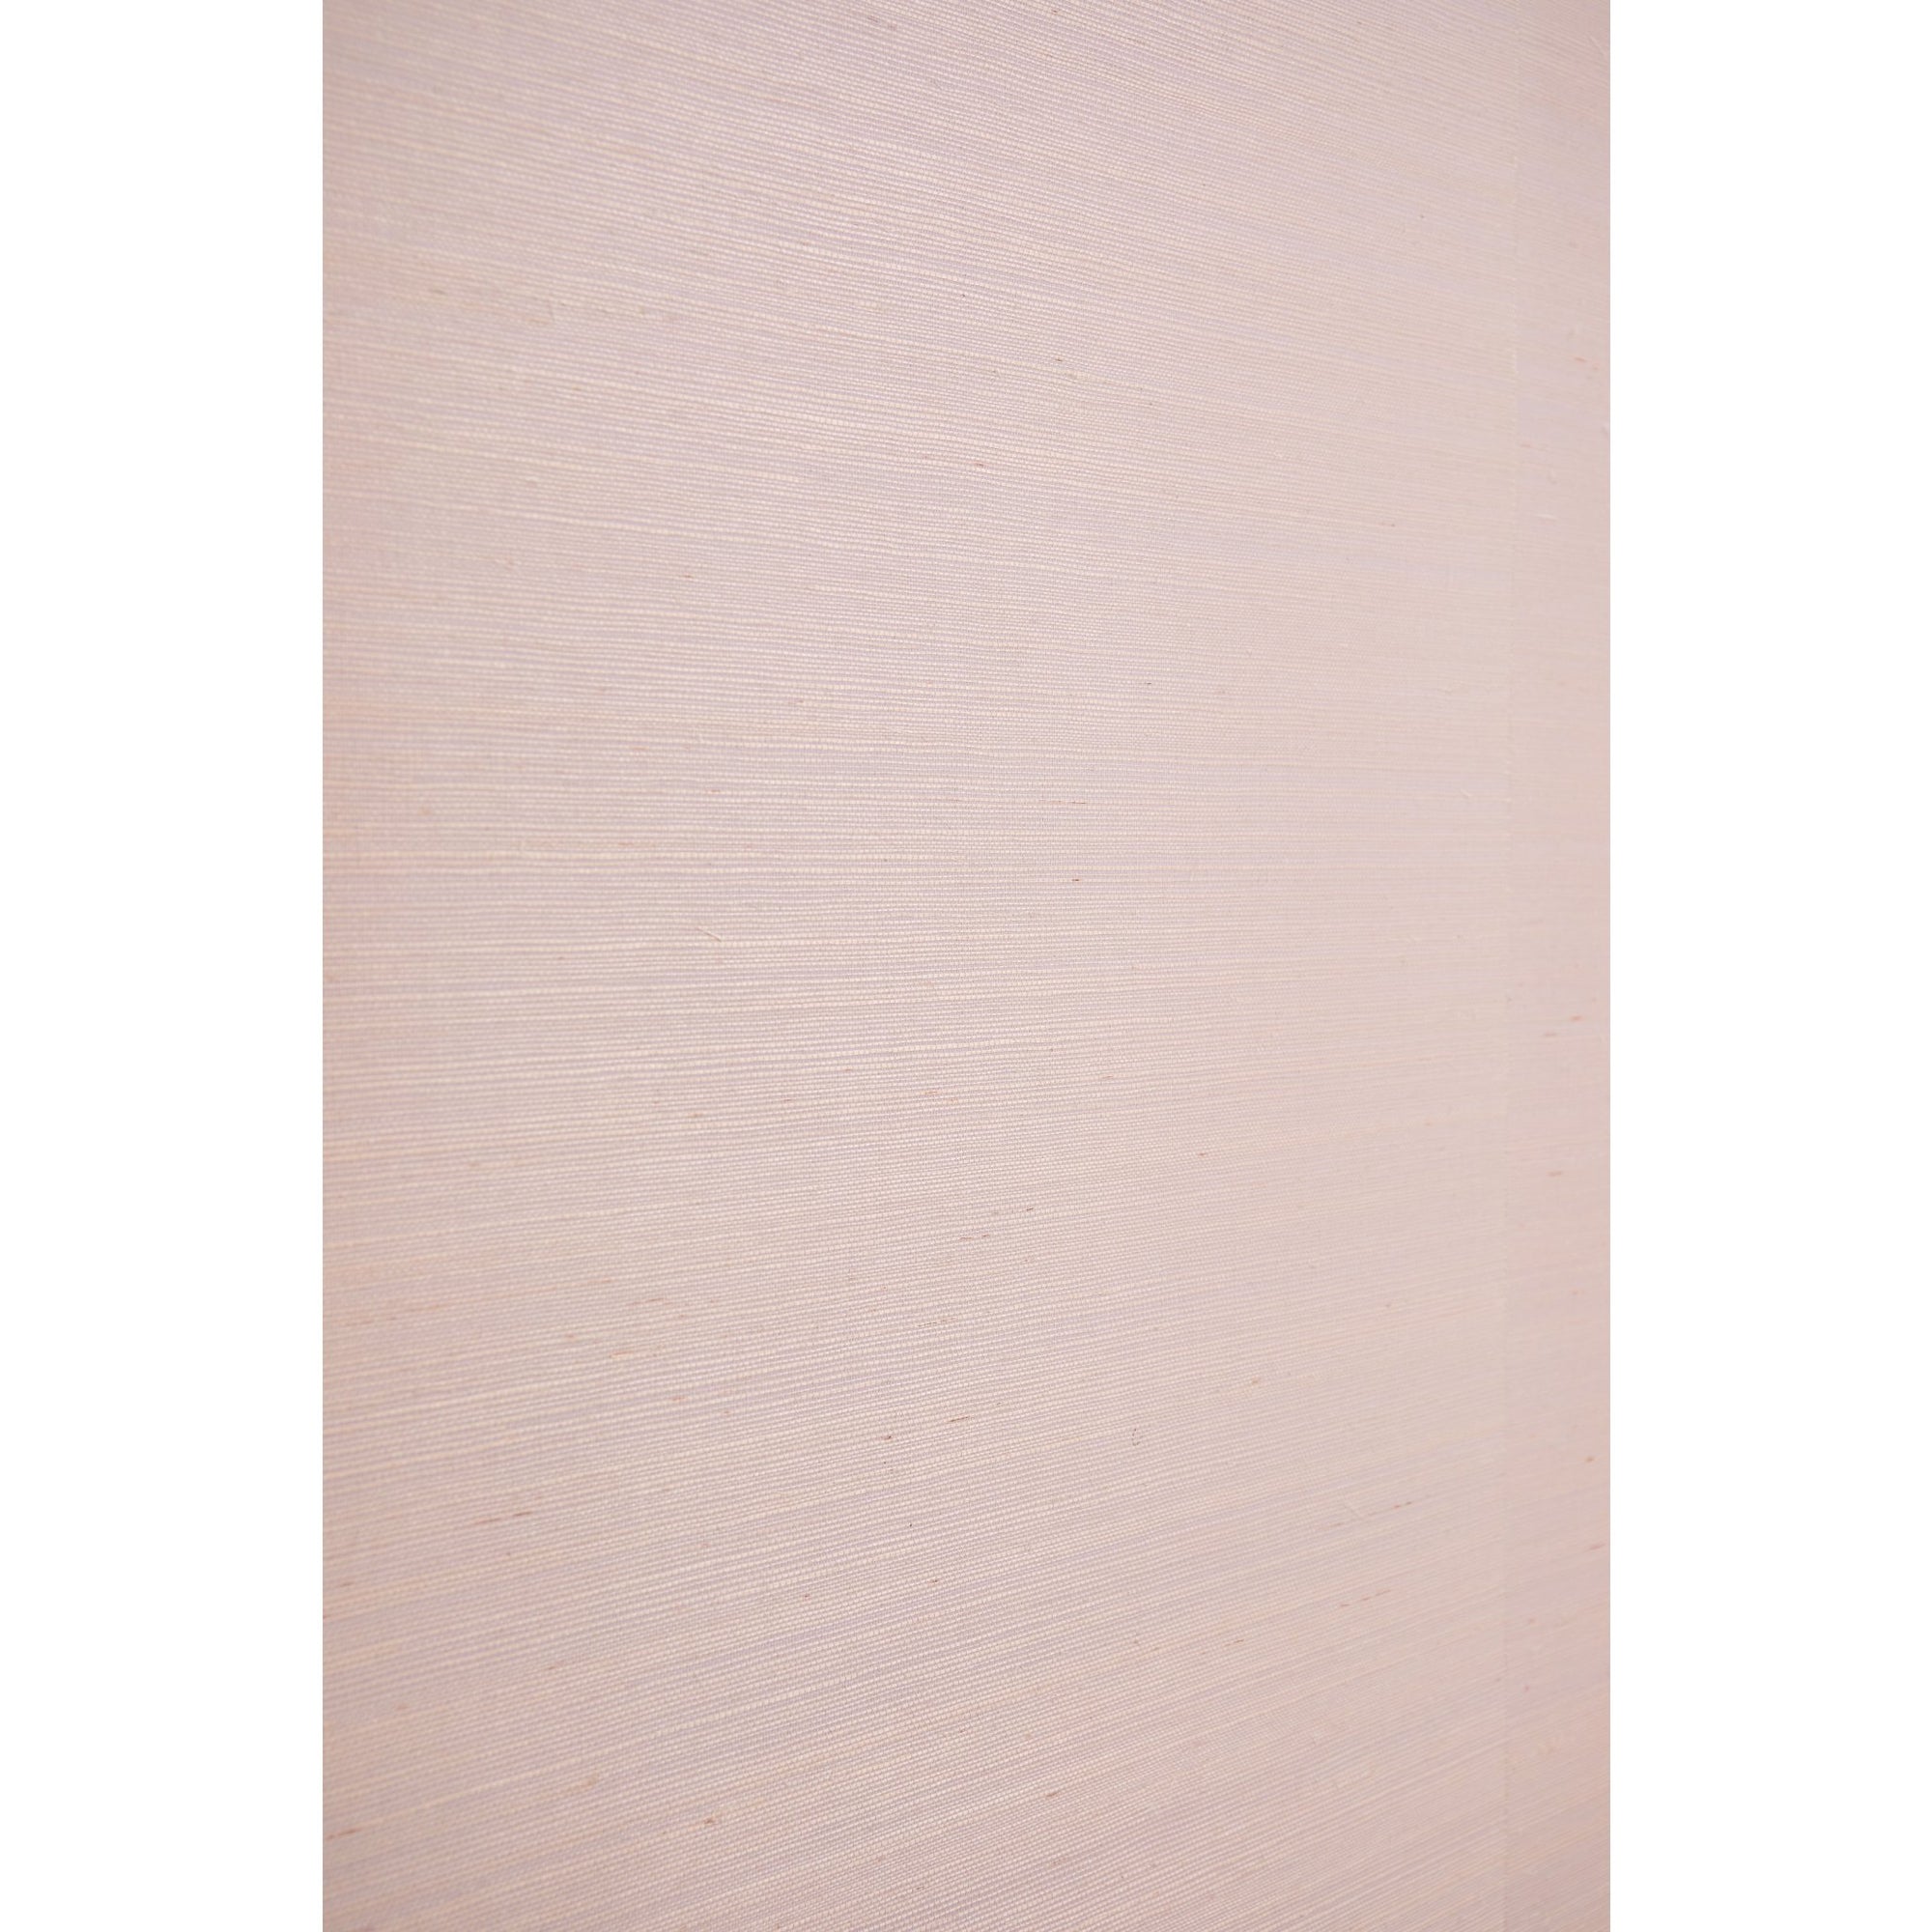 Pale Rose Grasscloth Wallpaper Texture